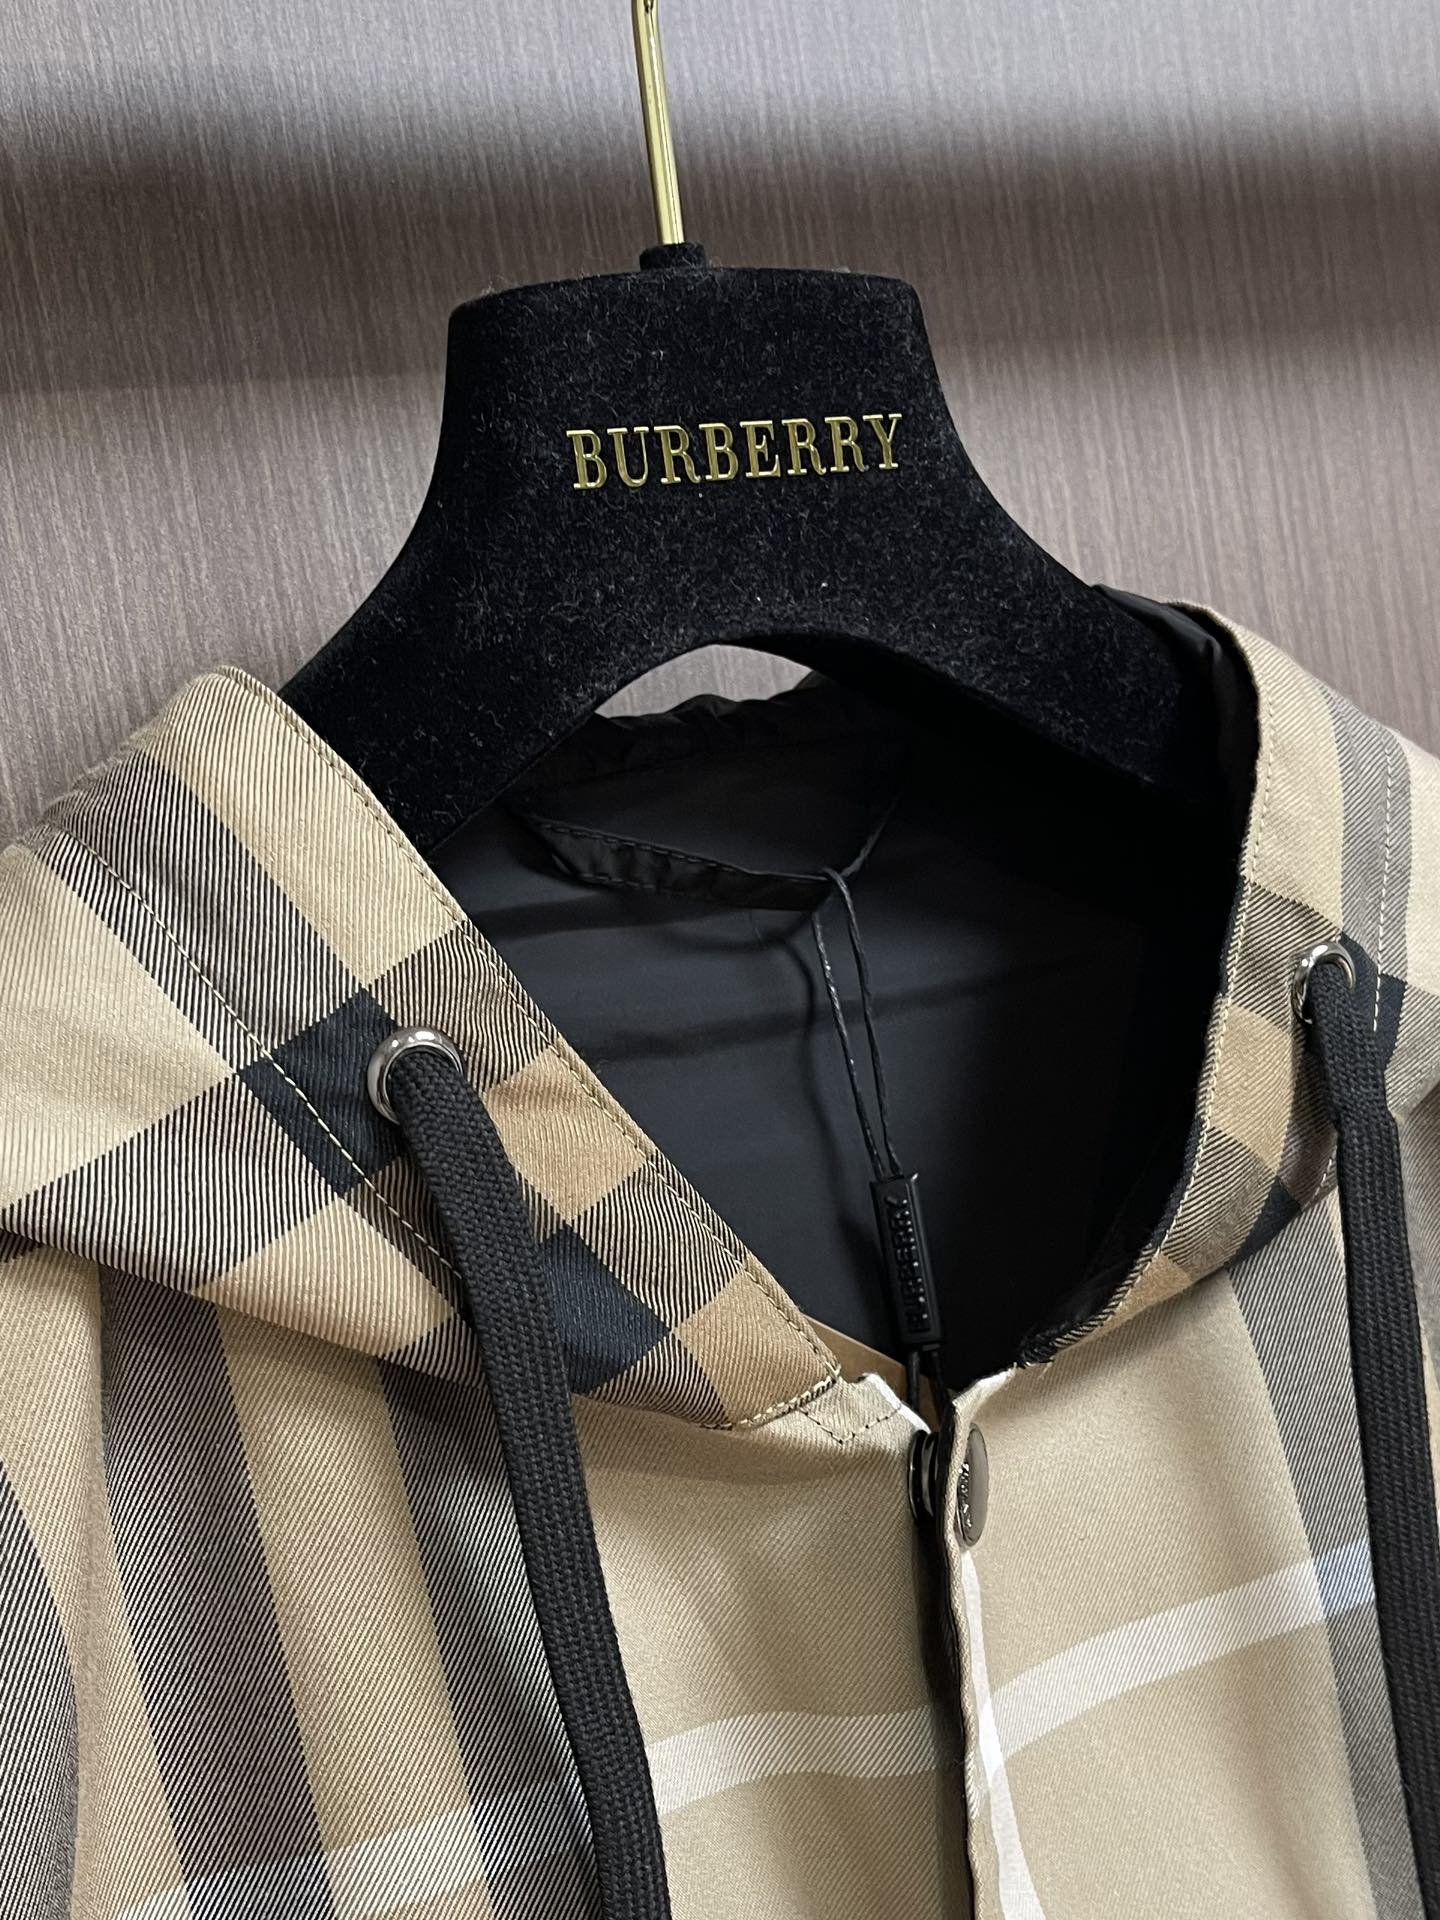 Burberry男装双面两穿纯色格仔尼龙外套经典格仔双面穿男装外套又一款实用率no.1的夹克无论从颜值到